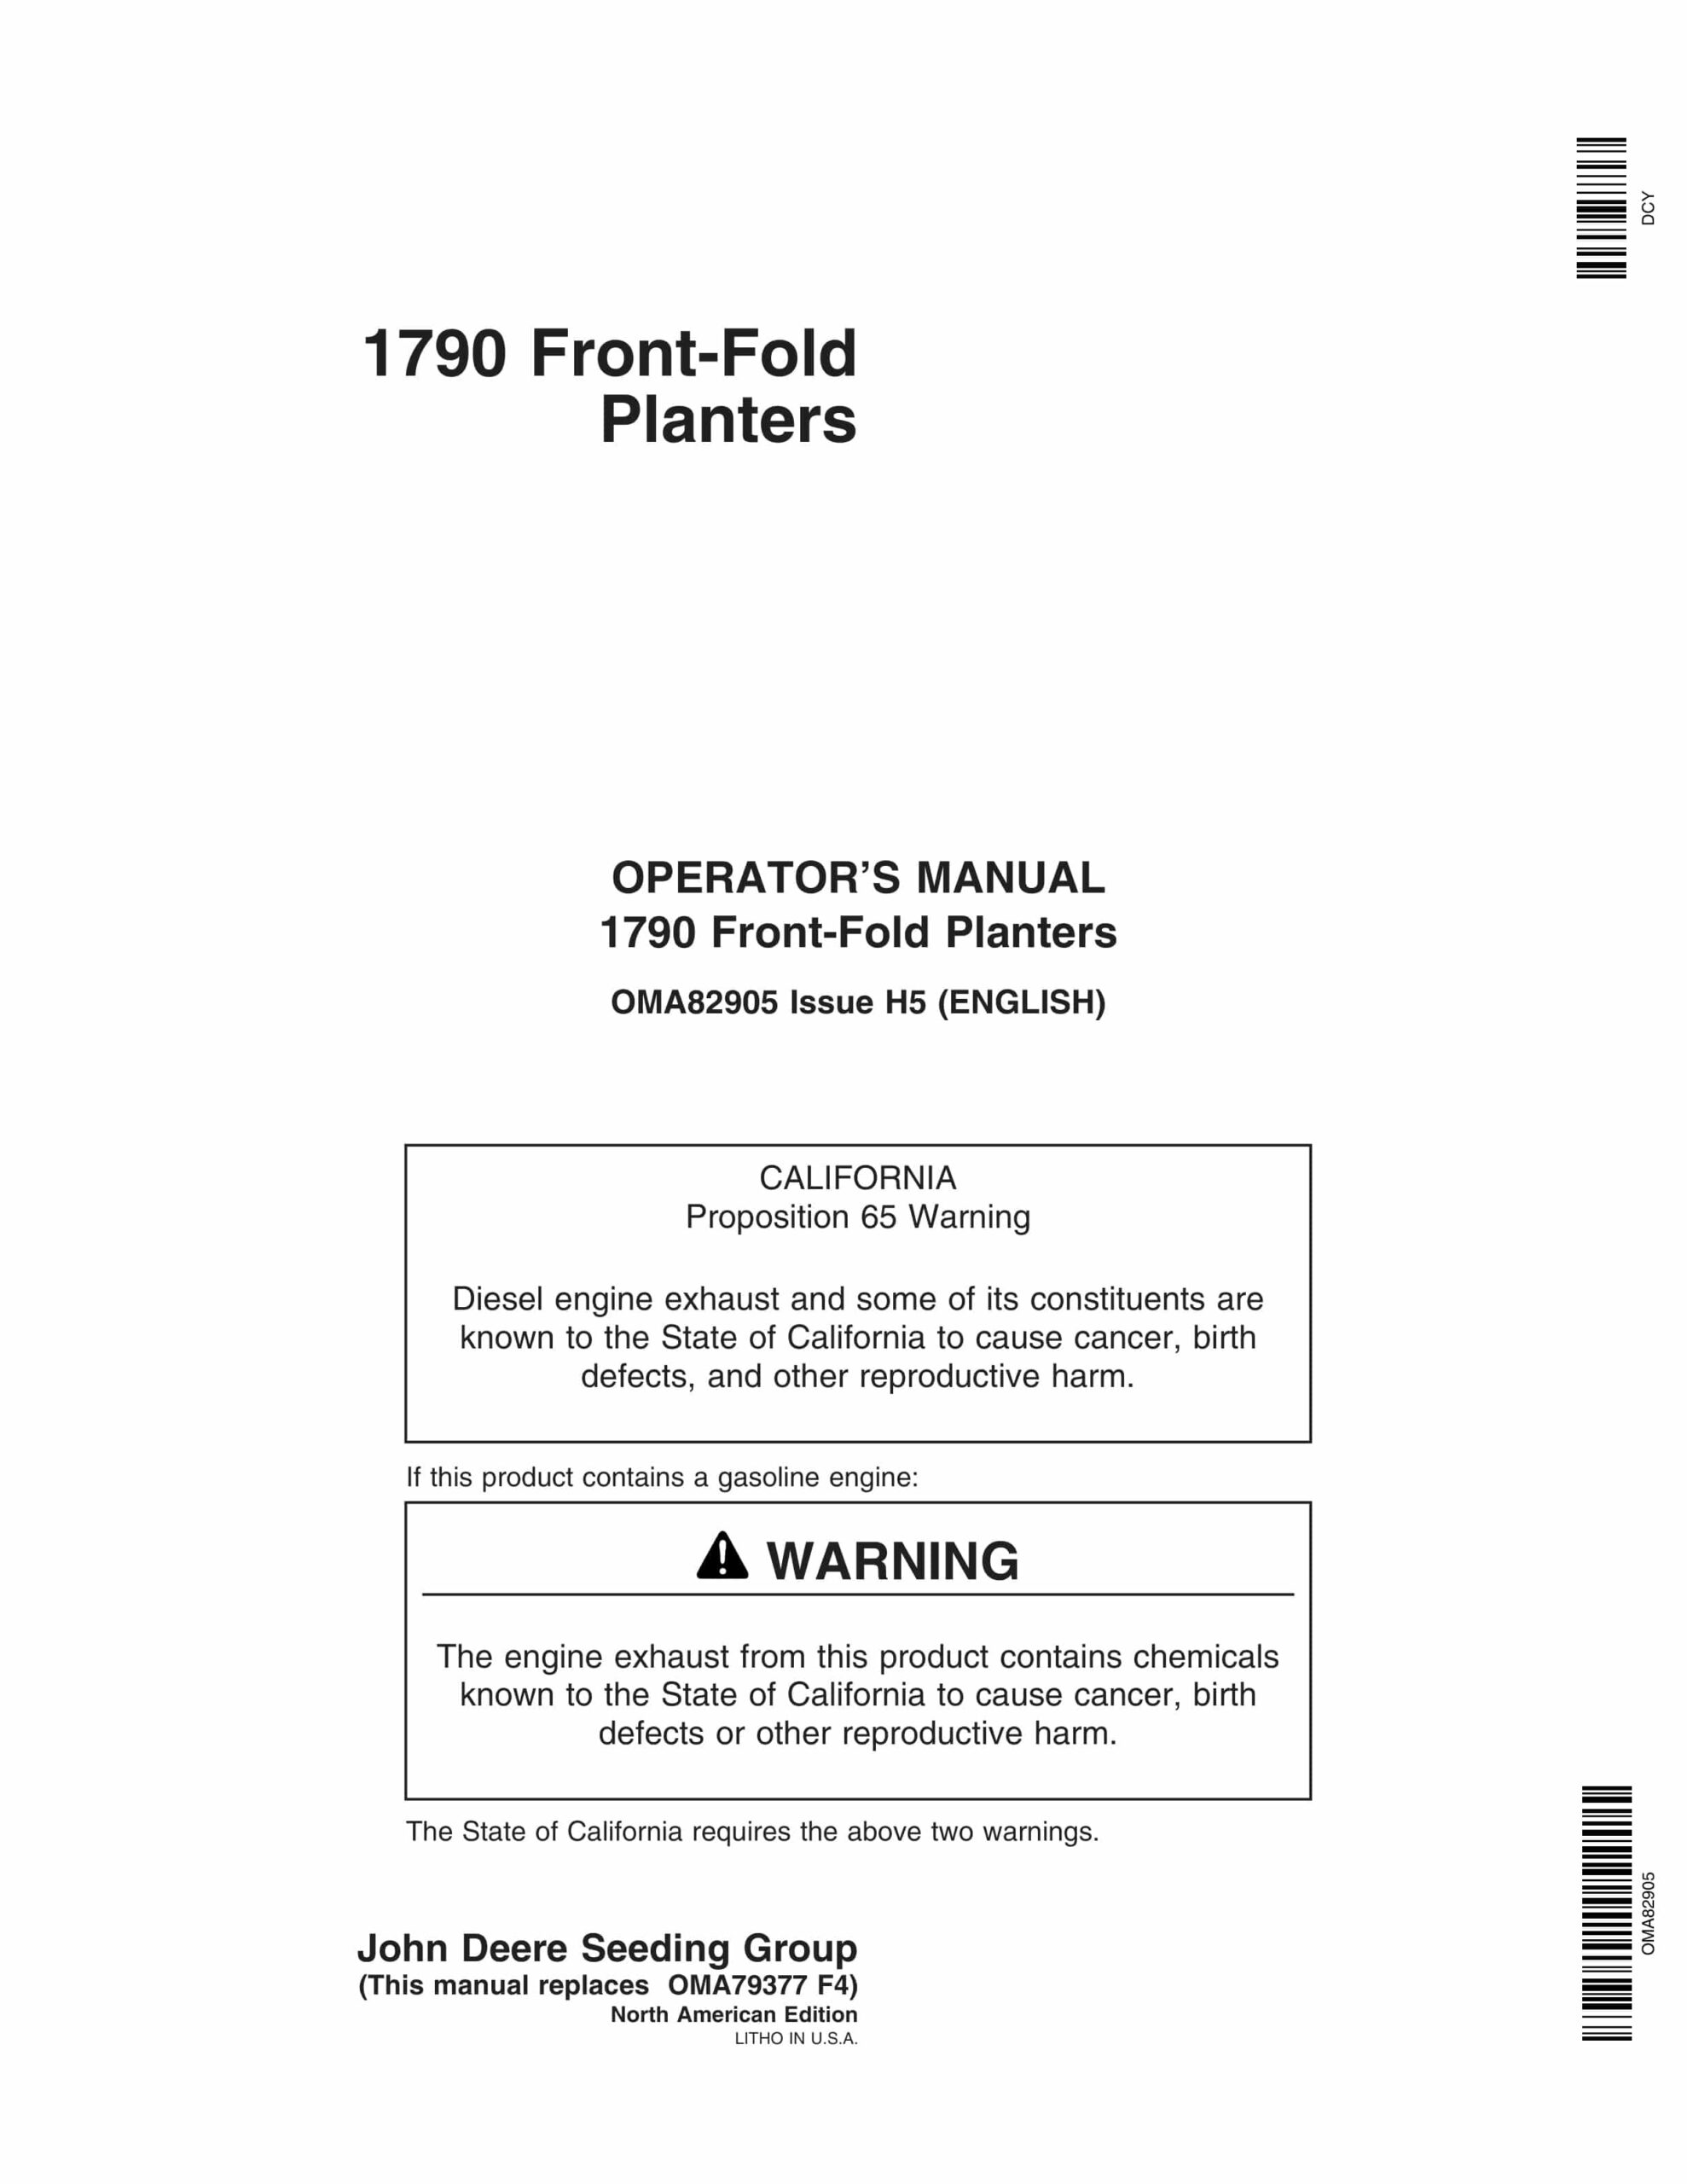 John Deere 1790 Front-Fold Planter Operator Manual OMA82905-1